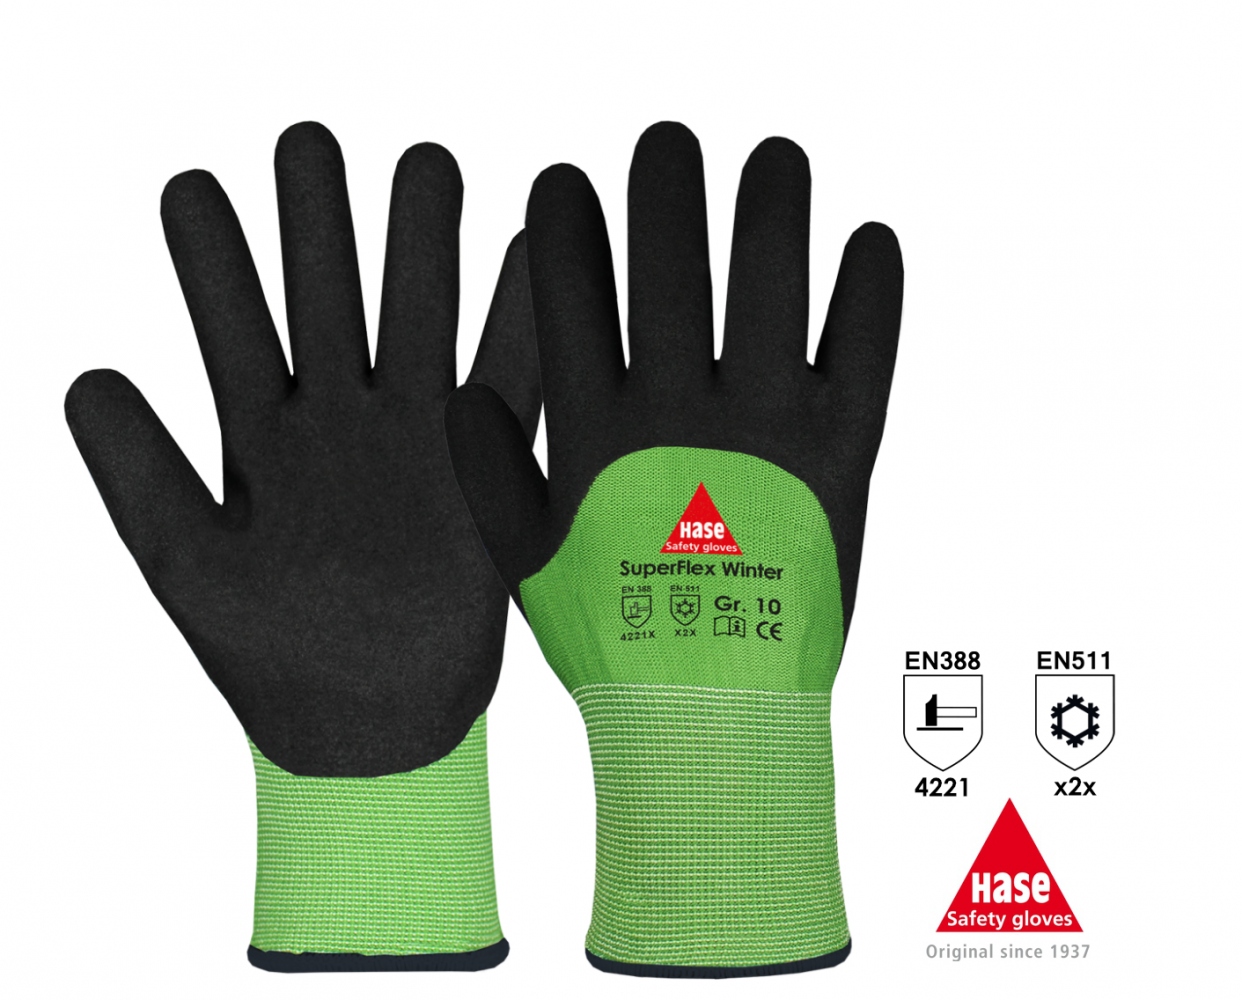 pics/hase-safety-gloves/hase-508620-hase-superflex-winter-arbeitshandschuhe.jpg